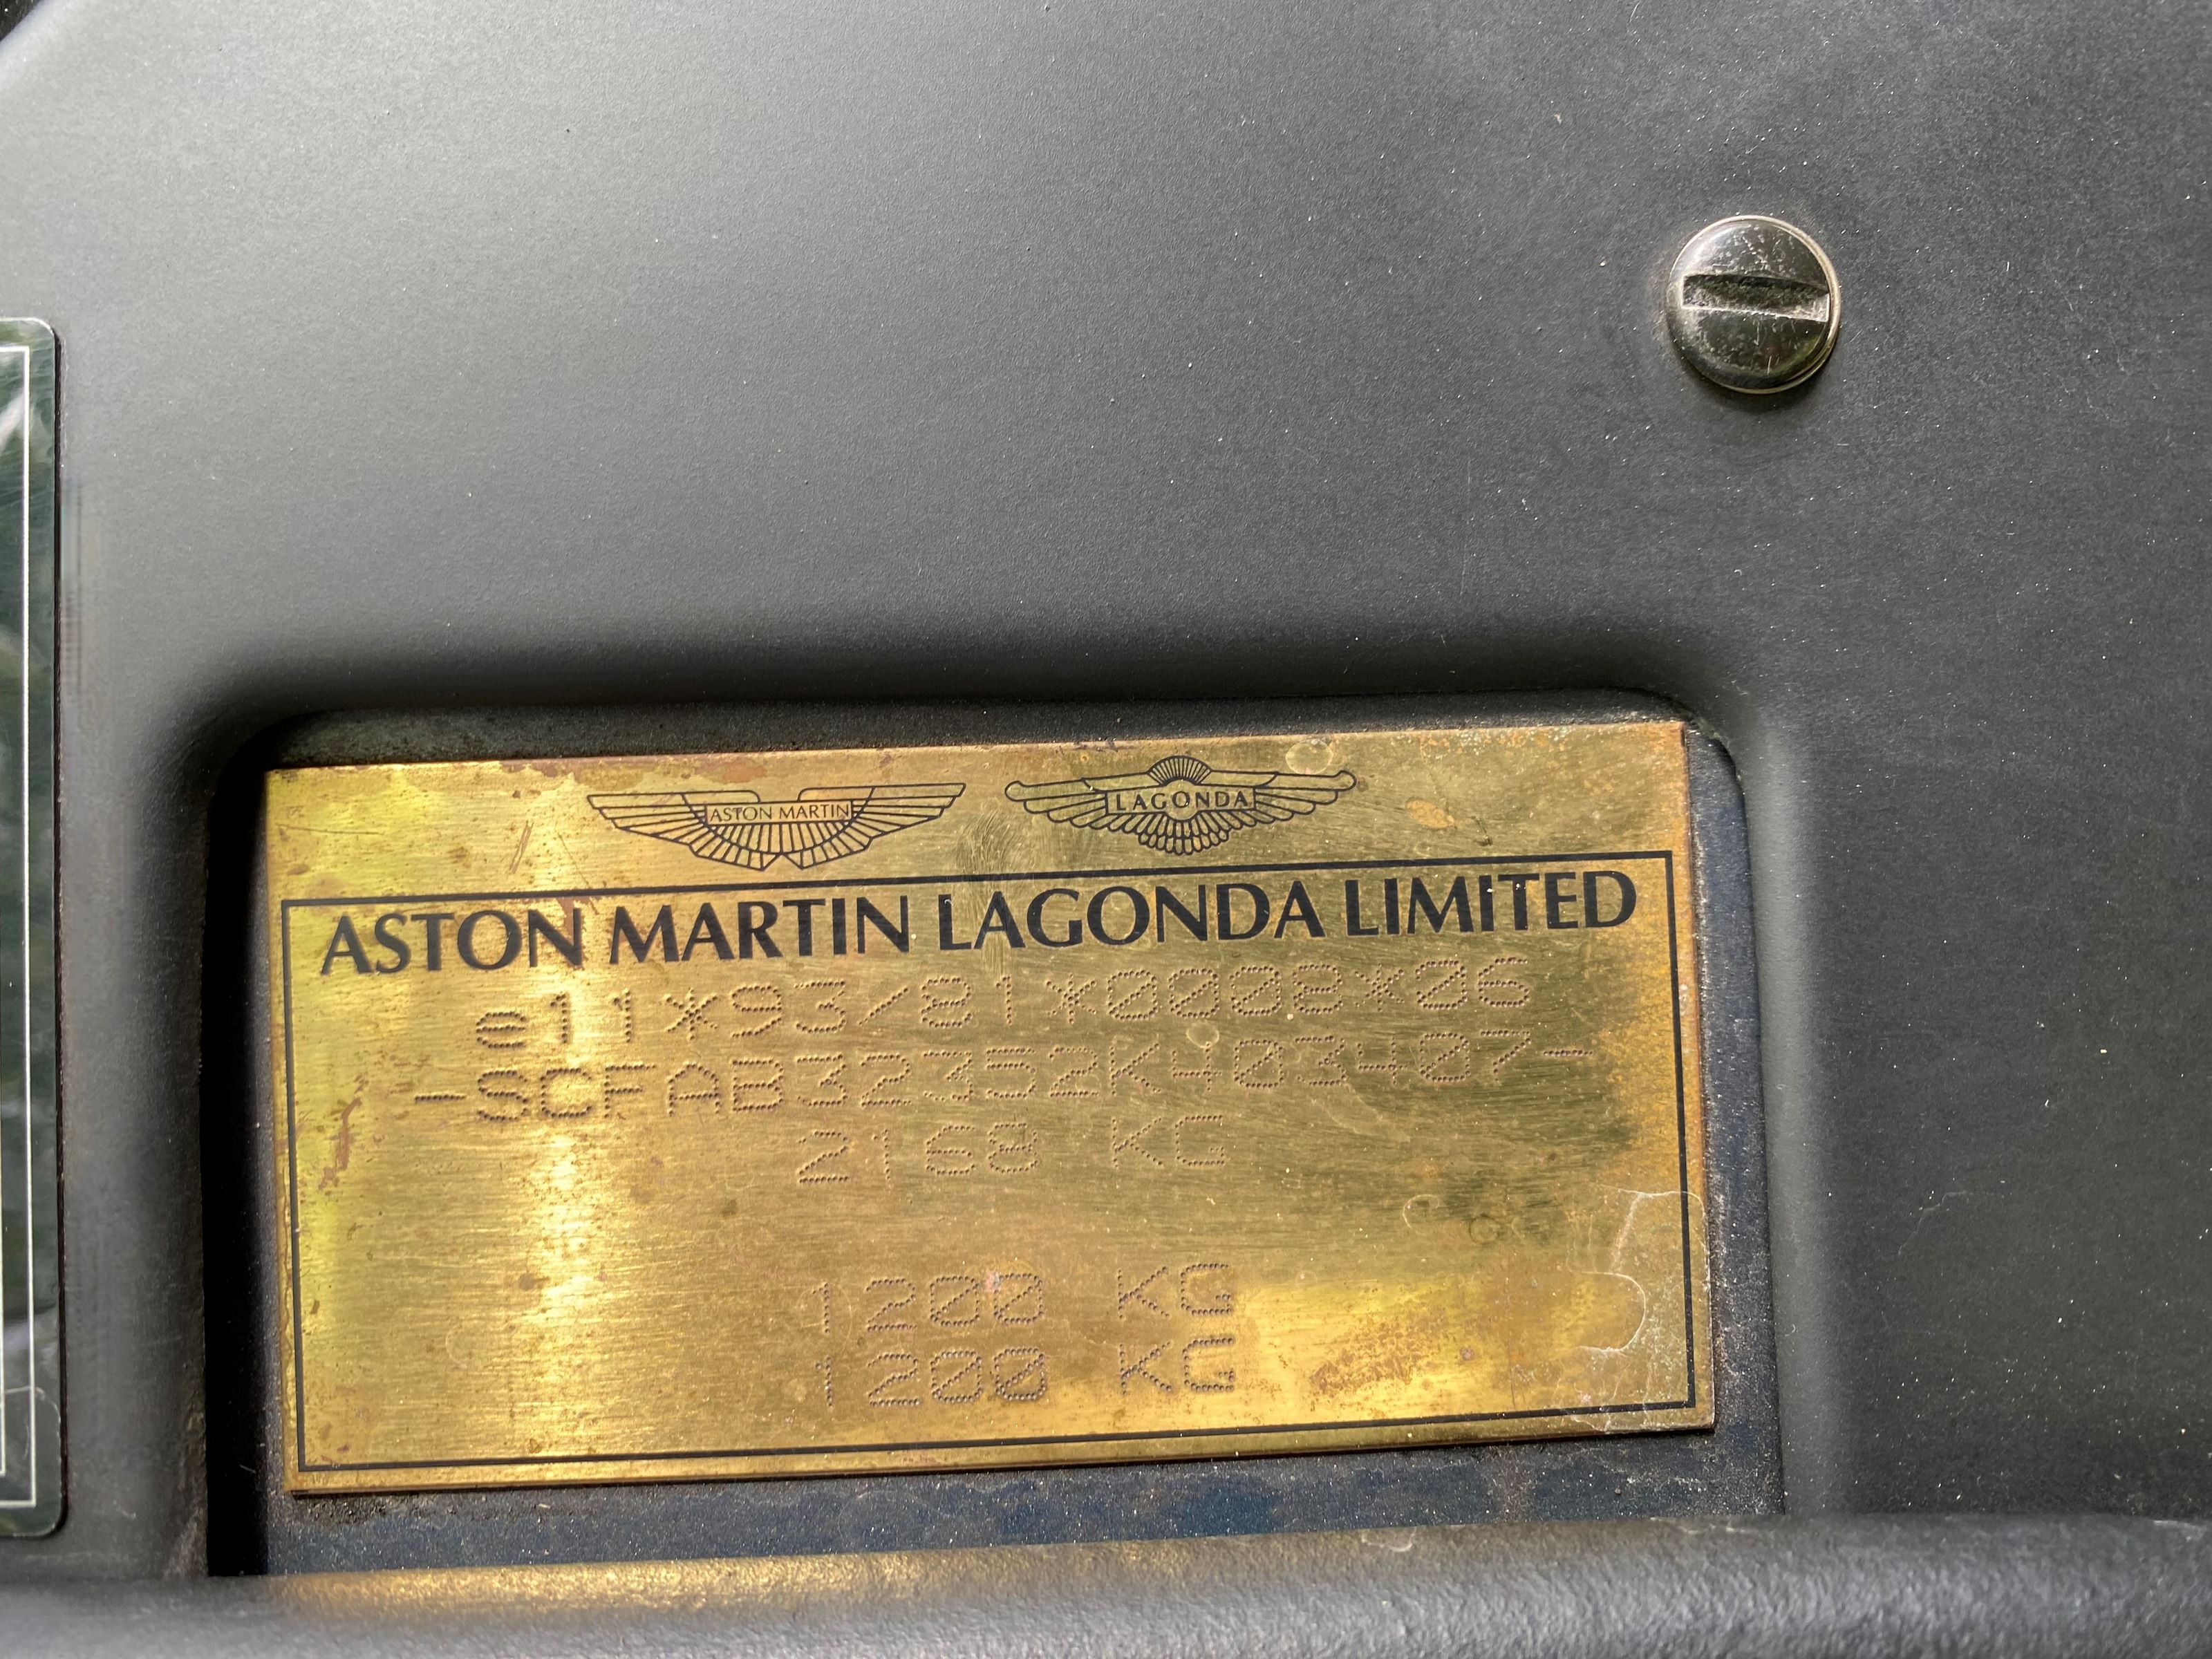 Aston martin db7 sdfyyrwt4mpq6gsx4jcbm